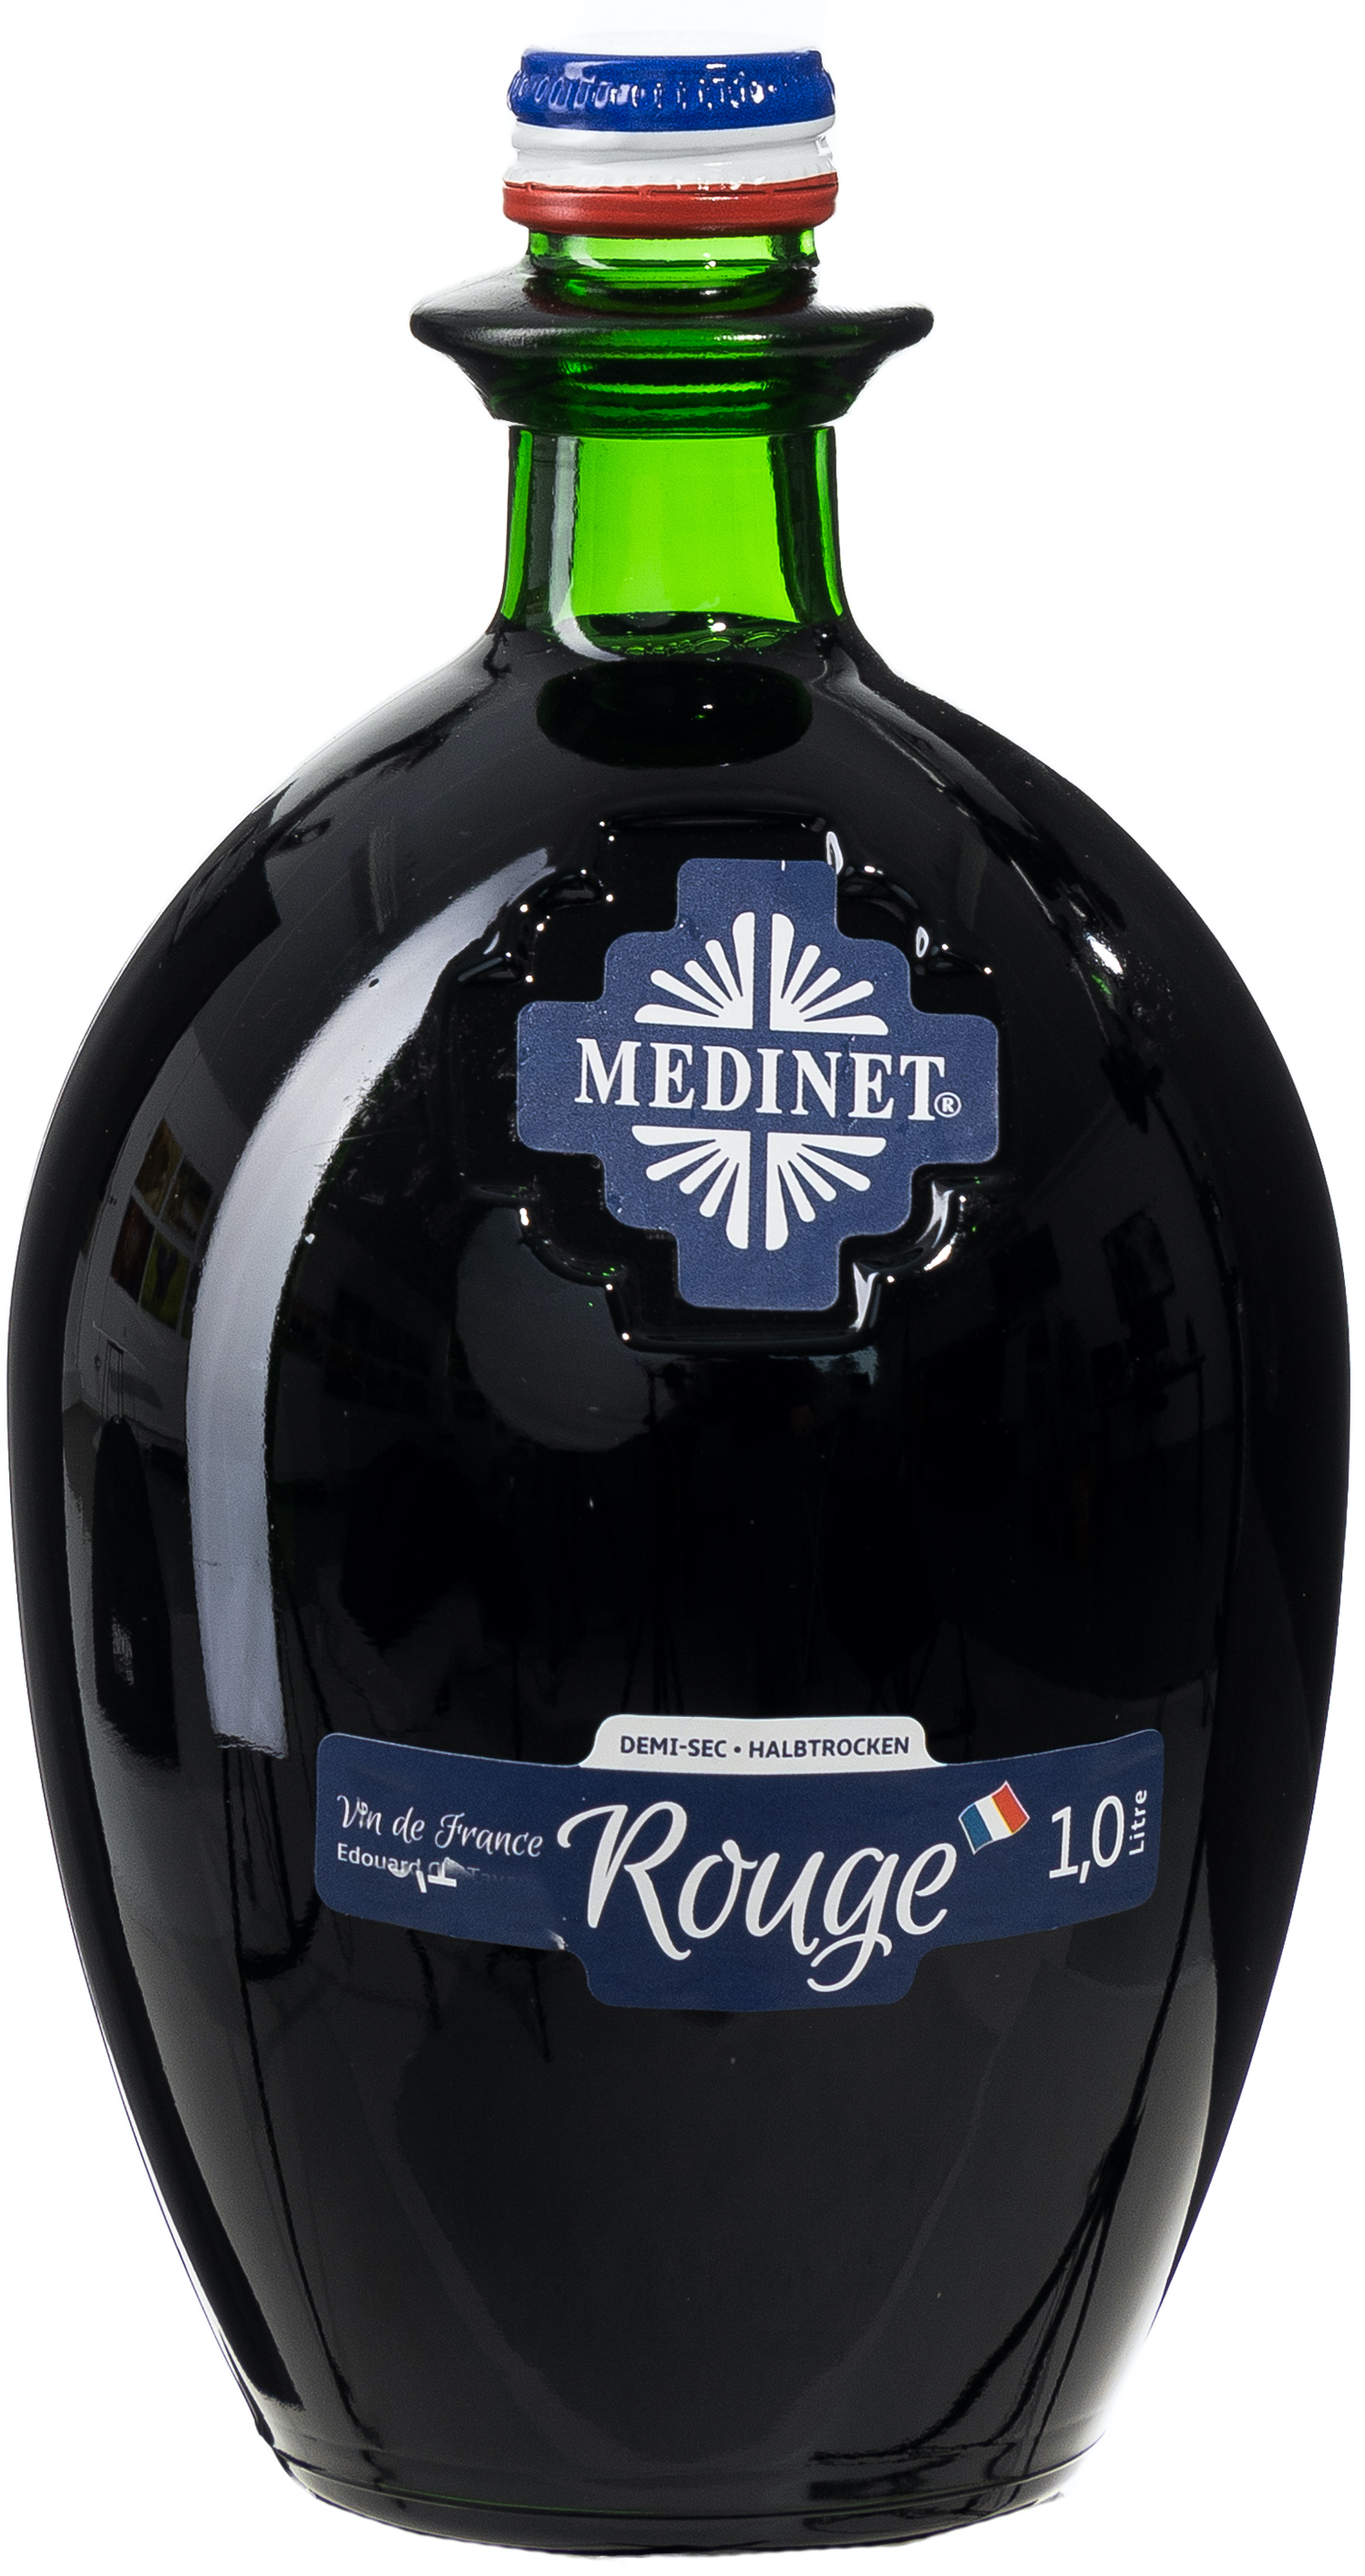 Medinet Rouge fruchtig süss 10% vol. 1,0L